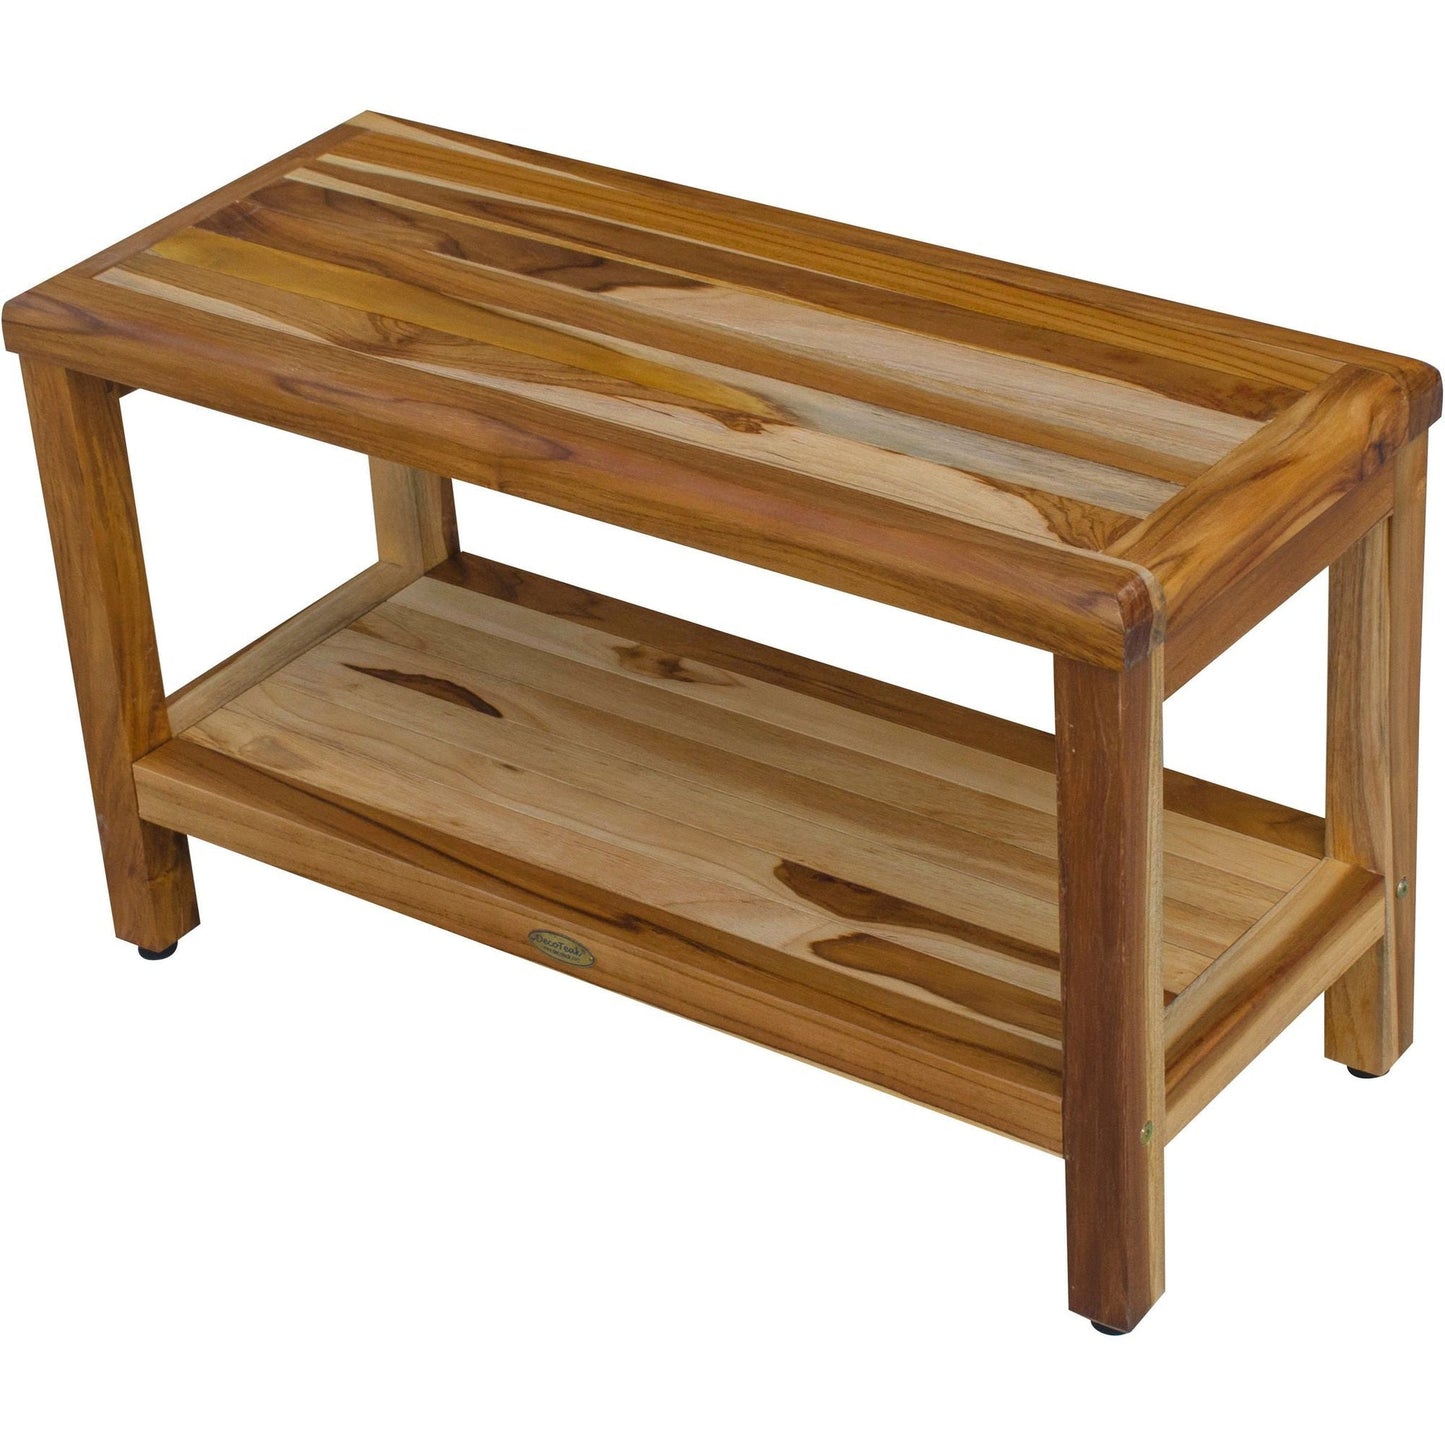 EcoDecors Eleganto 30" EarthyTeak Solid Teak Wood Shower Bench With Shelf